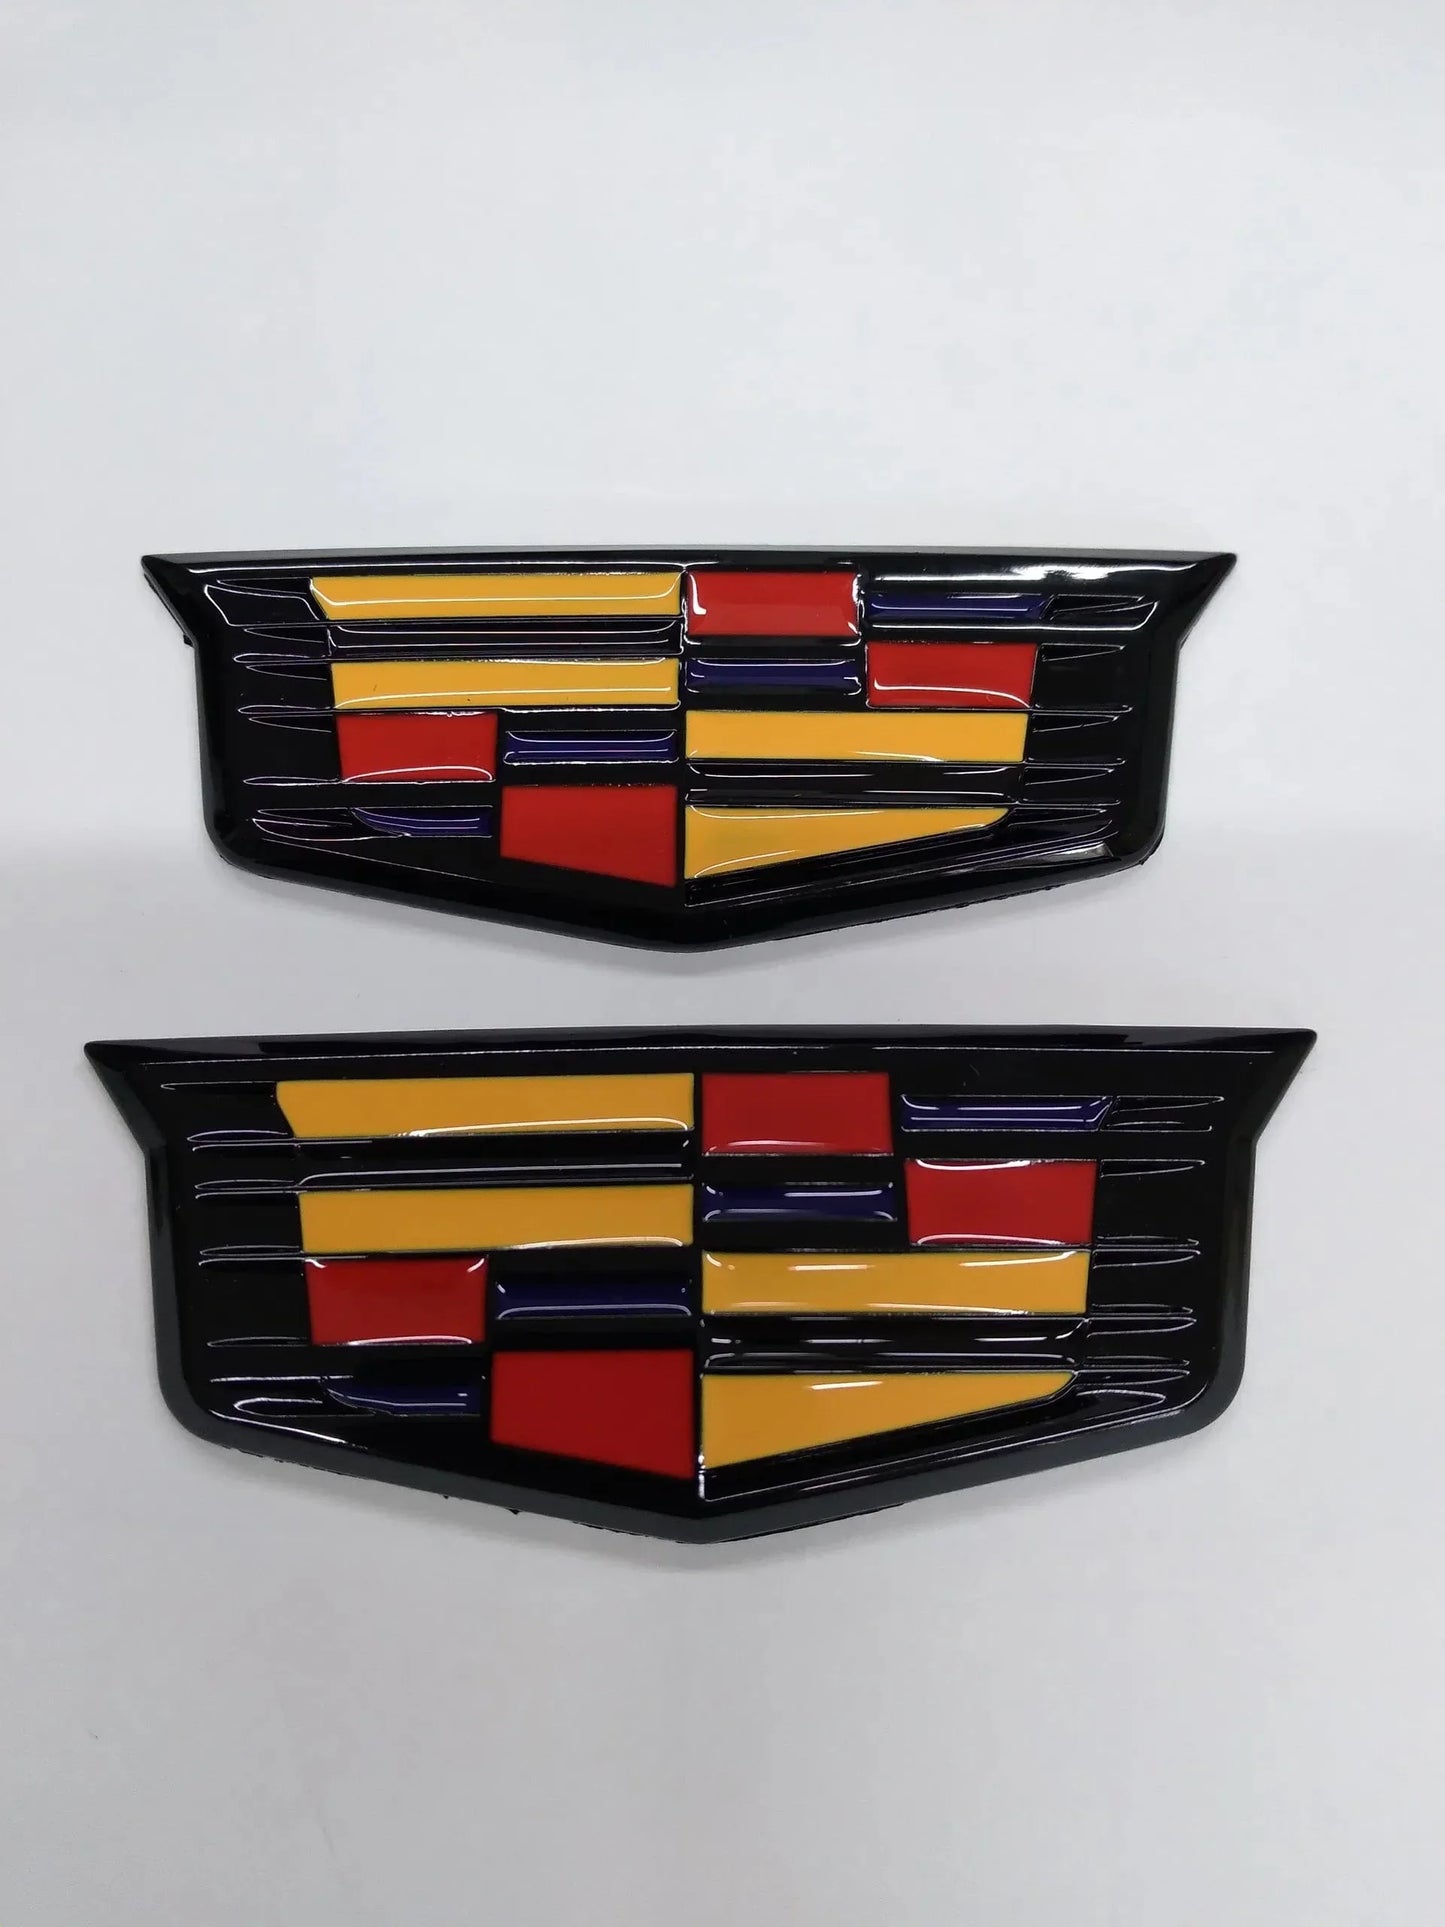 CT4-V Cadillac "Shield" Small Black Fender Emblems w/ Colored Center